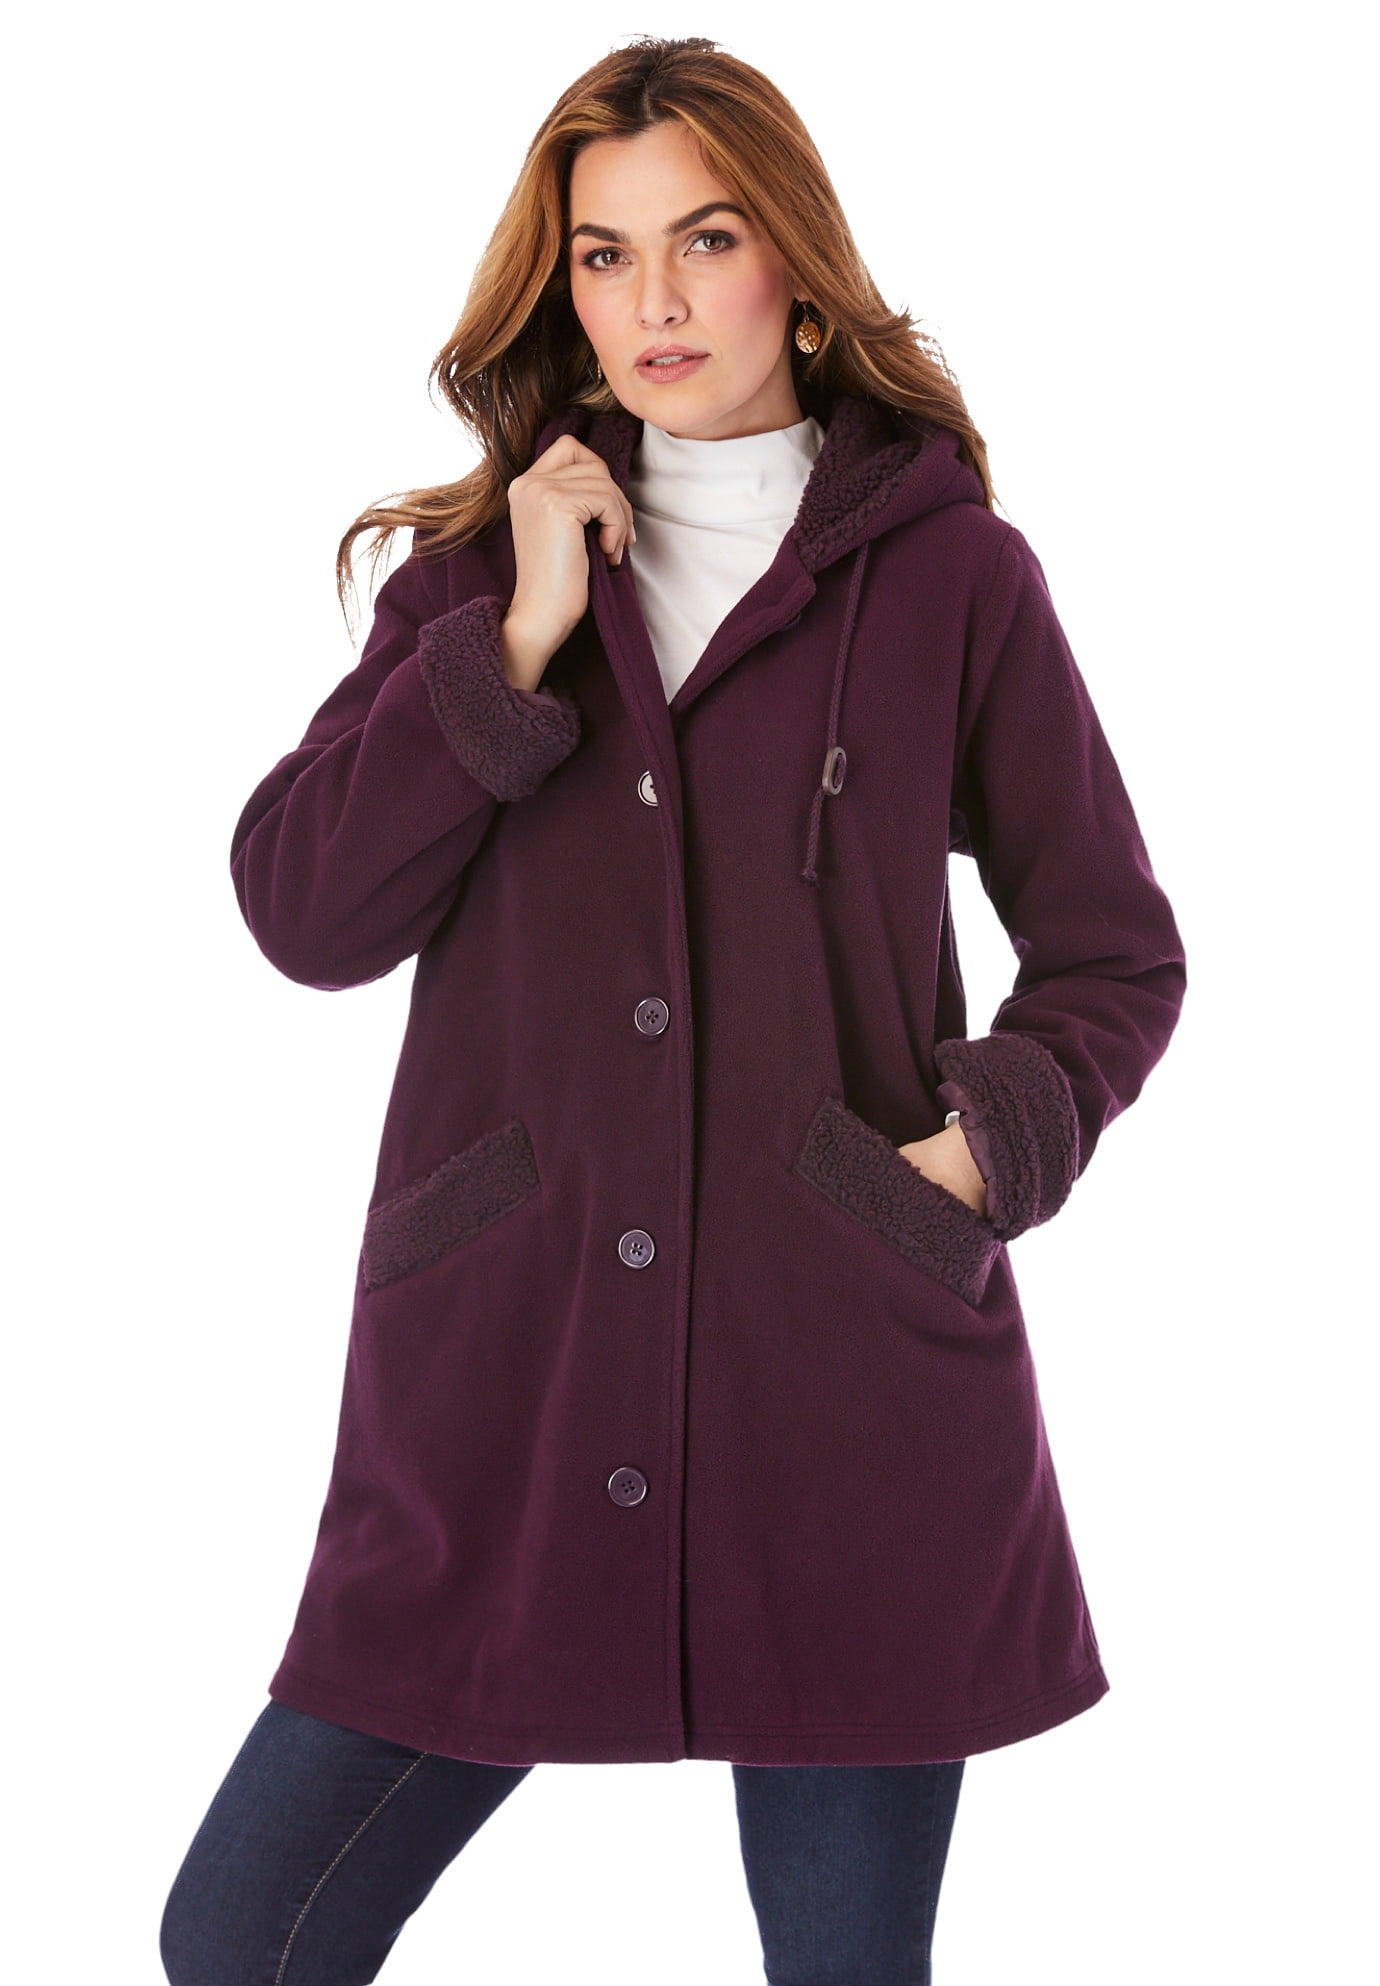 Roaman's Women's Plus Size Hooded Button-Front Fleece Coat - Walmart.com